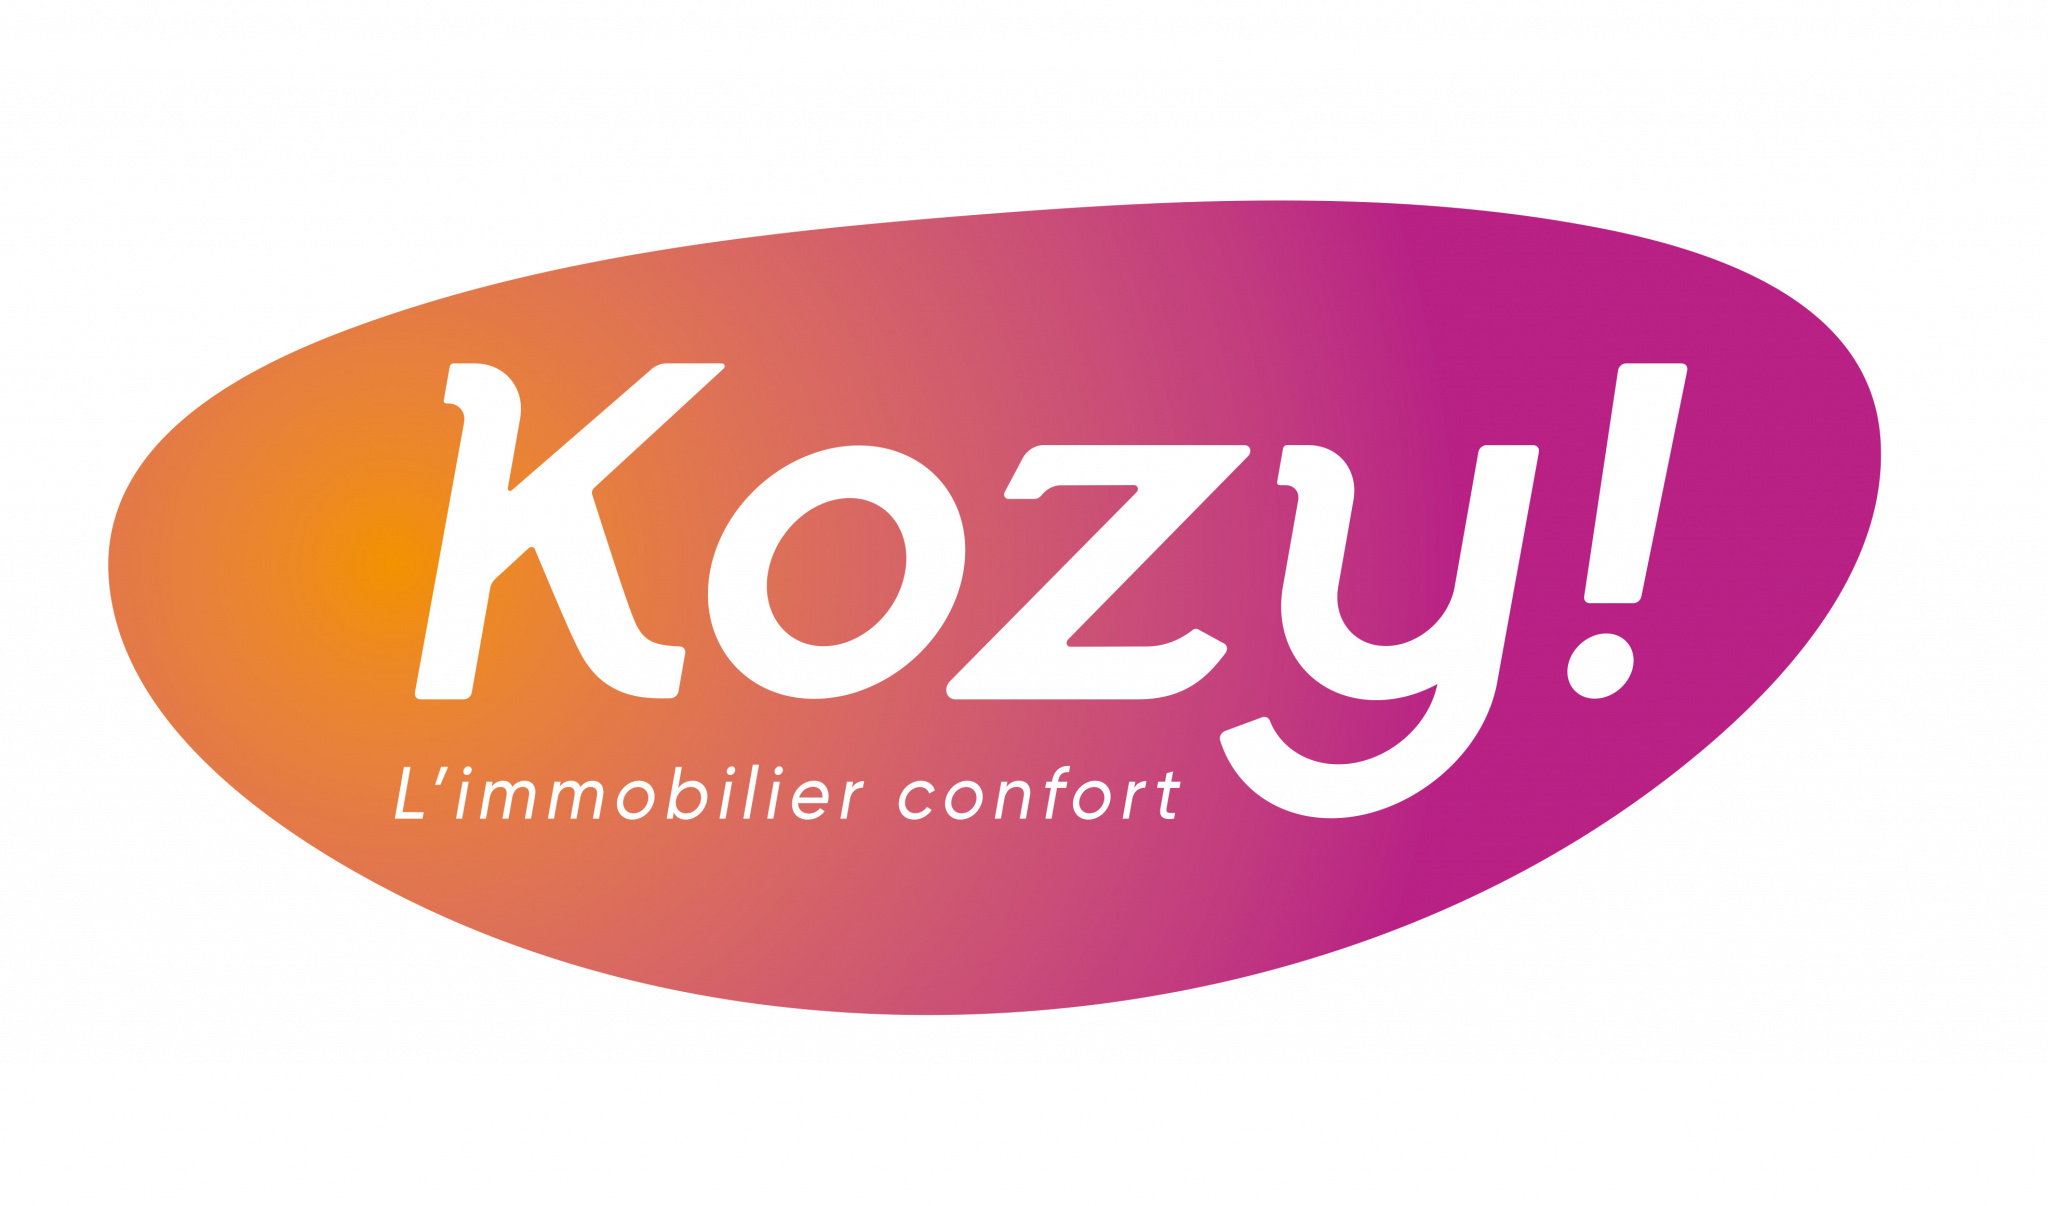 Kozy, la marque Transaction de France...